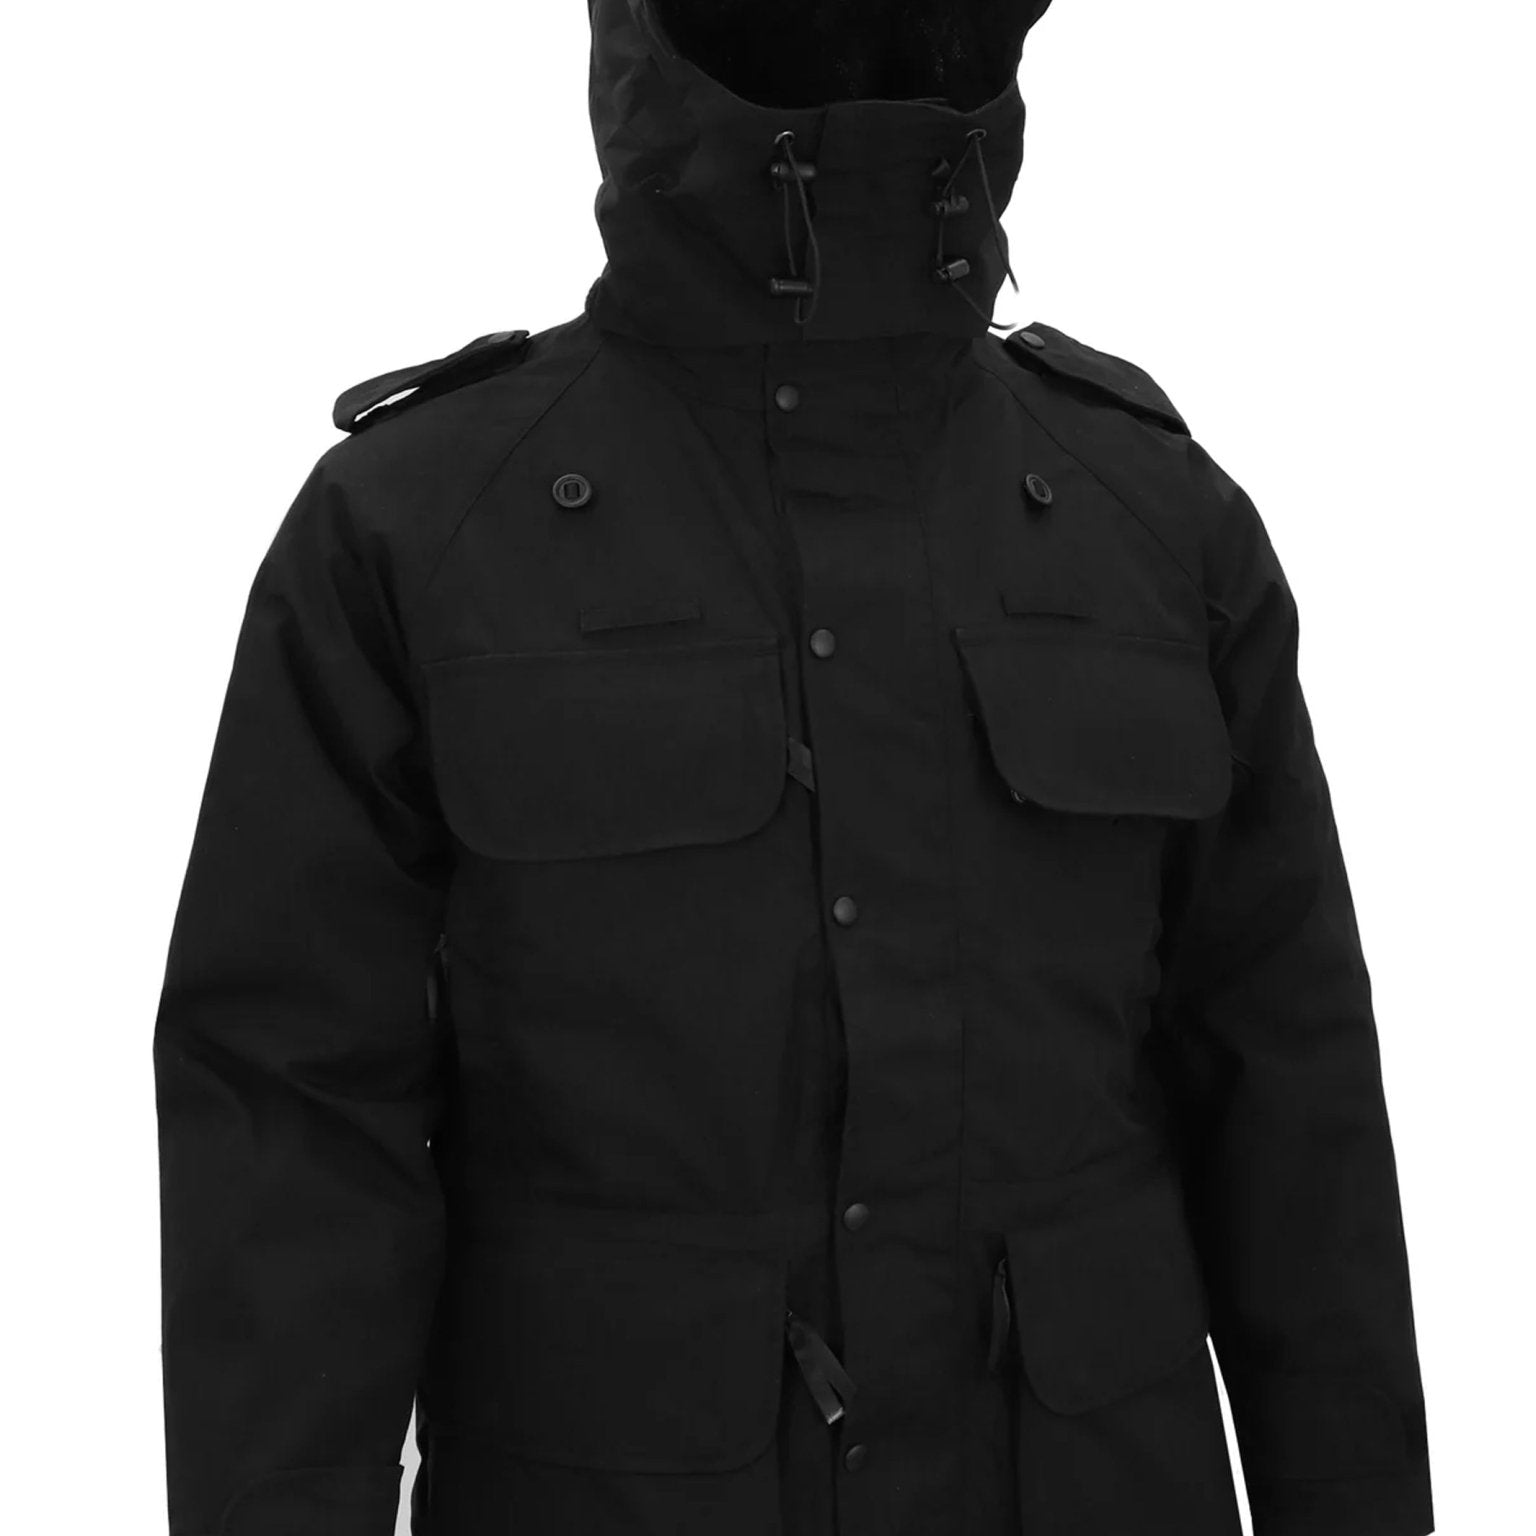 4elementsclothingArktisArktis - B315 Avenger Waterproof, Breathable Coat / Jacket - Ripstop& Detachable FleeceOuterwearB315-XS-BK